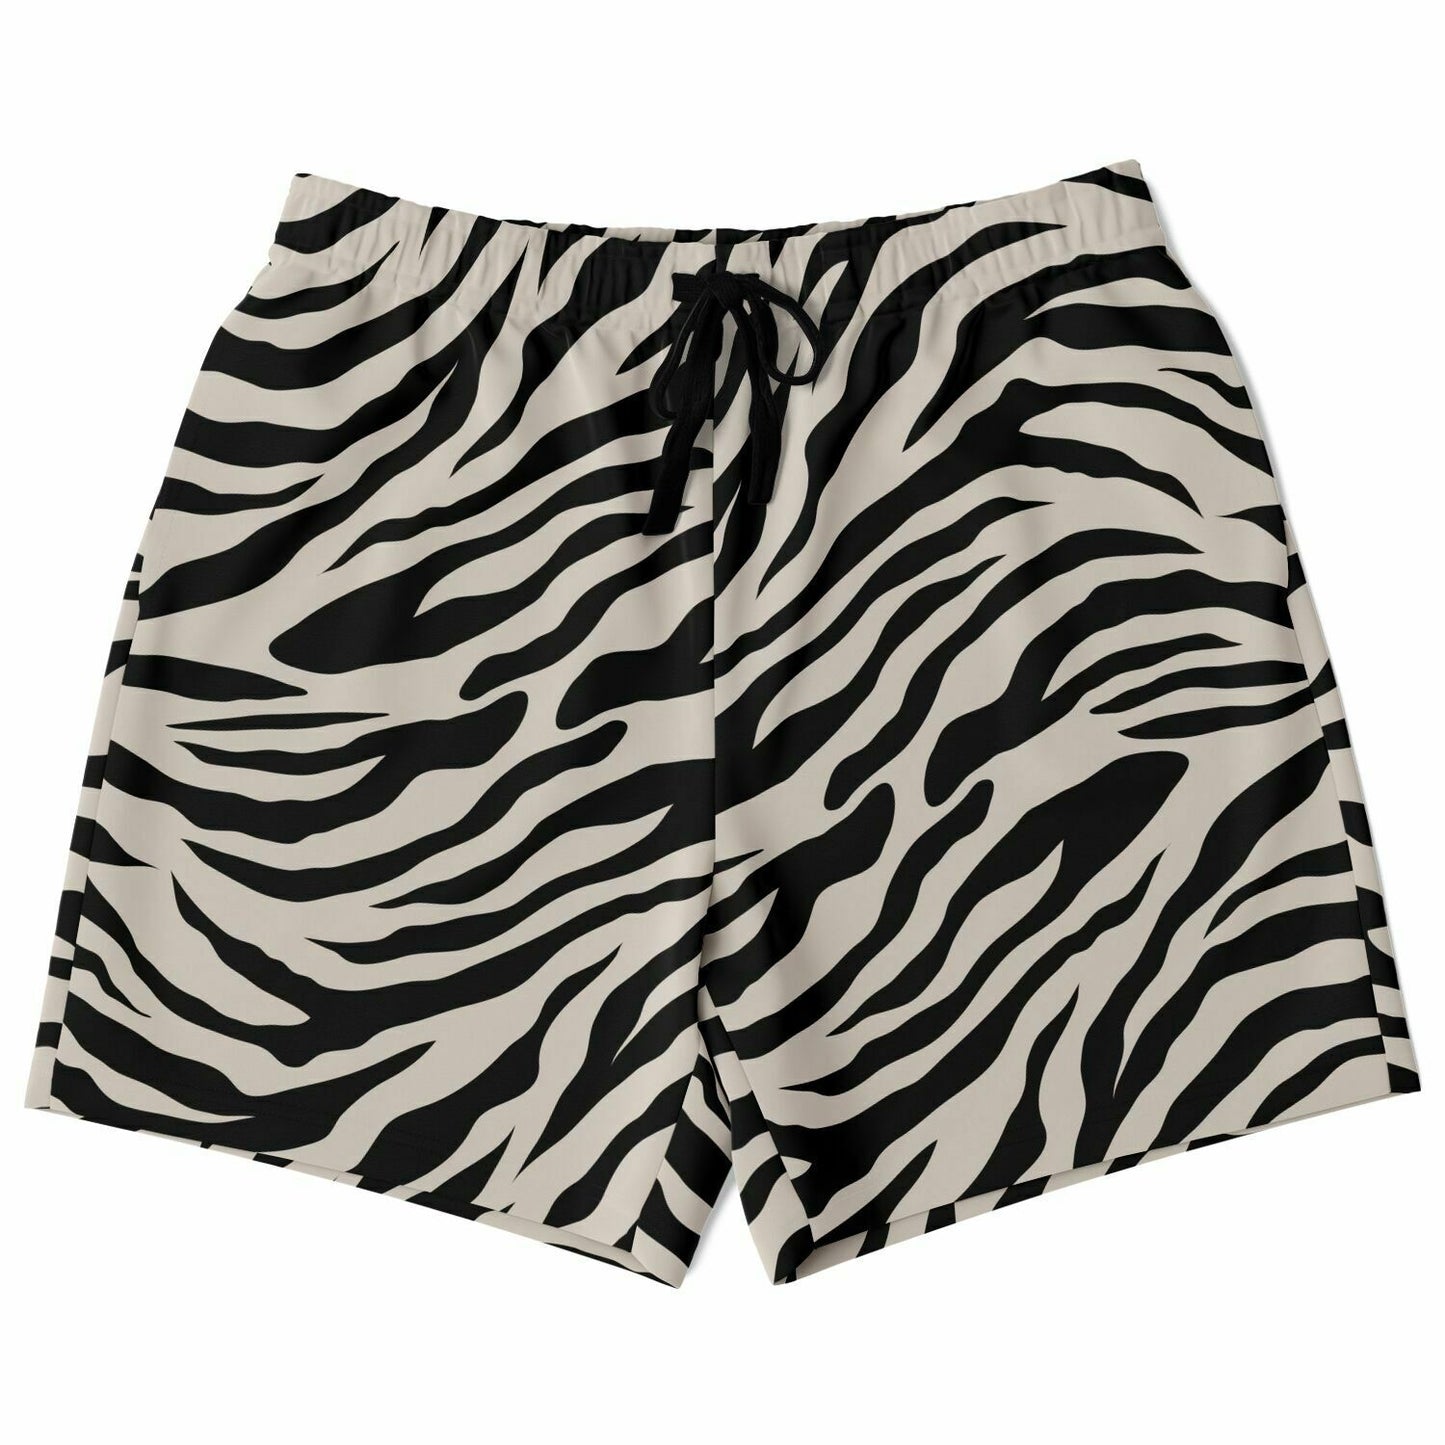 Tiger Sand Fleece Shorts